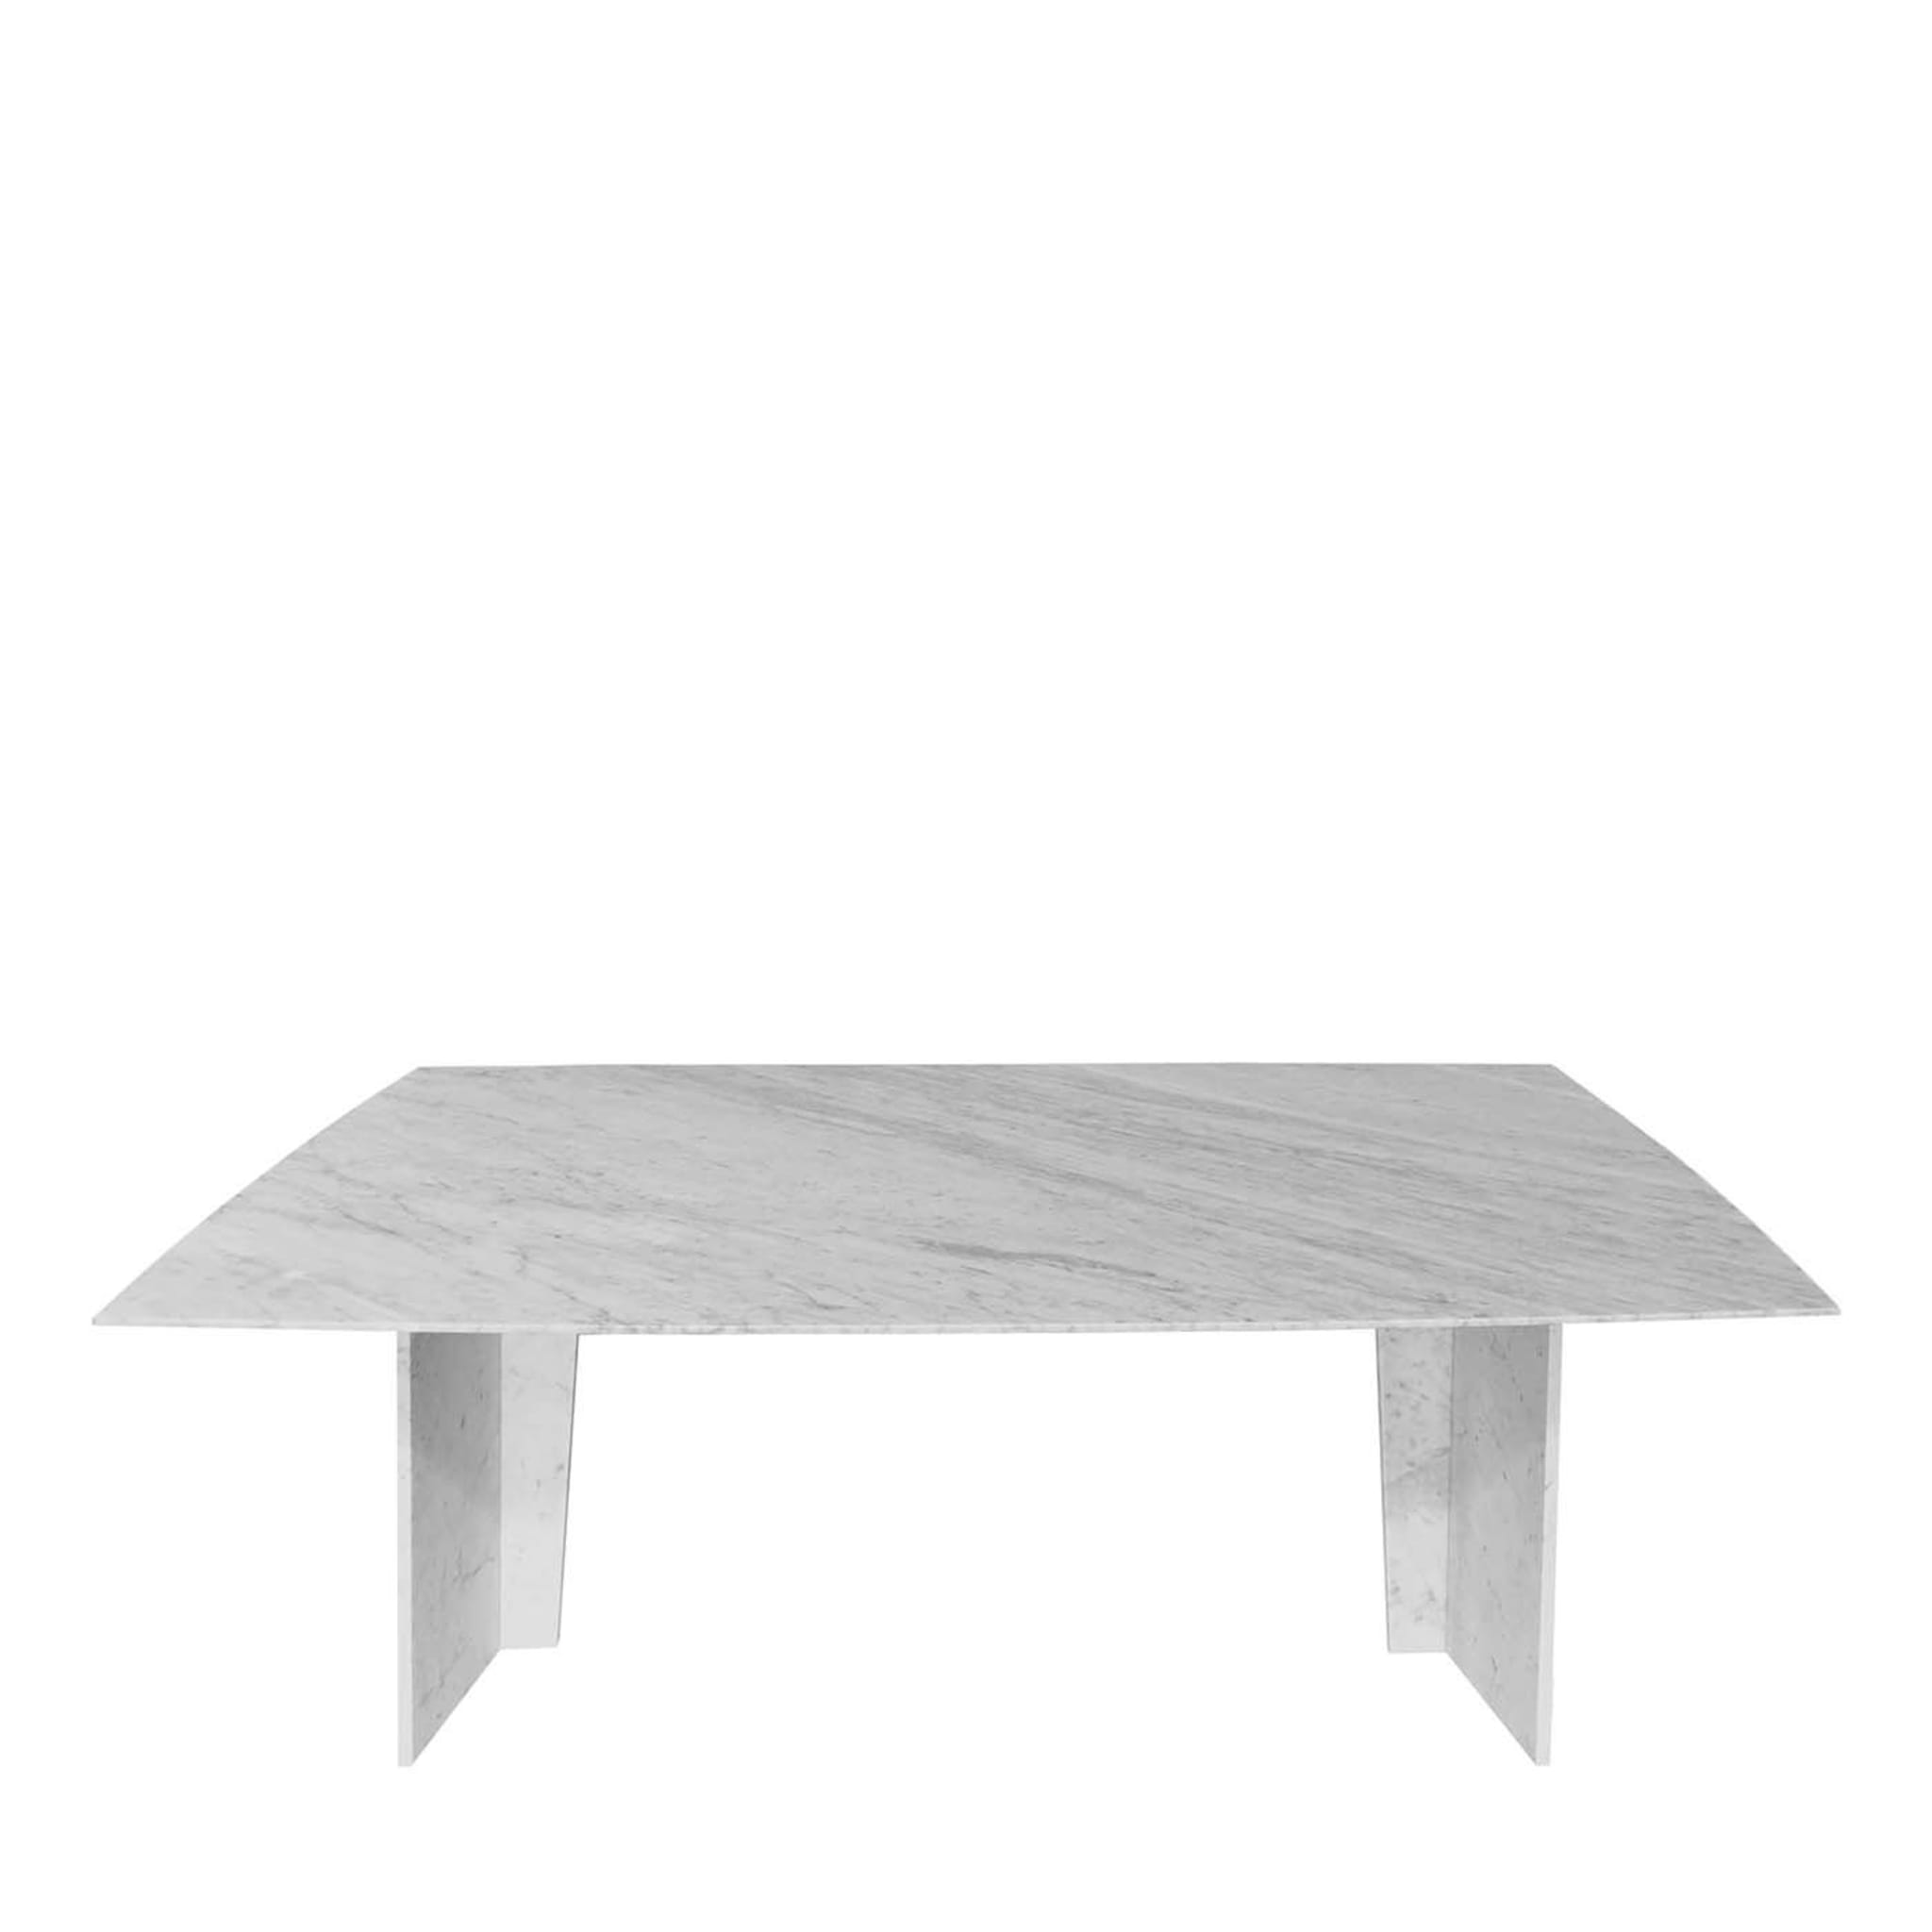 Oblong Steven Table in White Marble - Main view